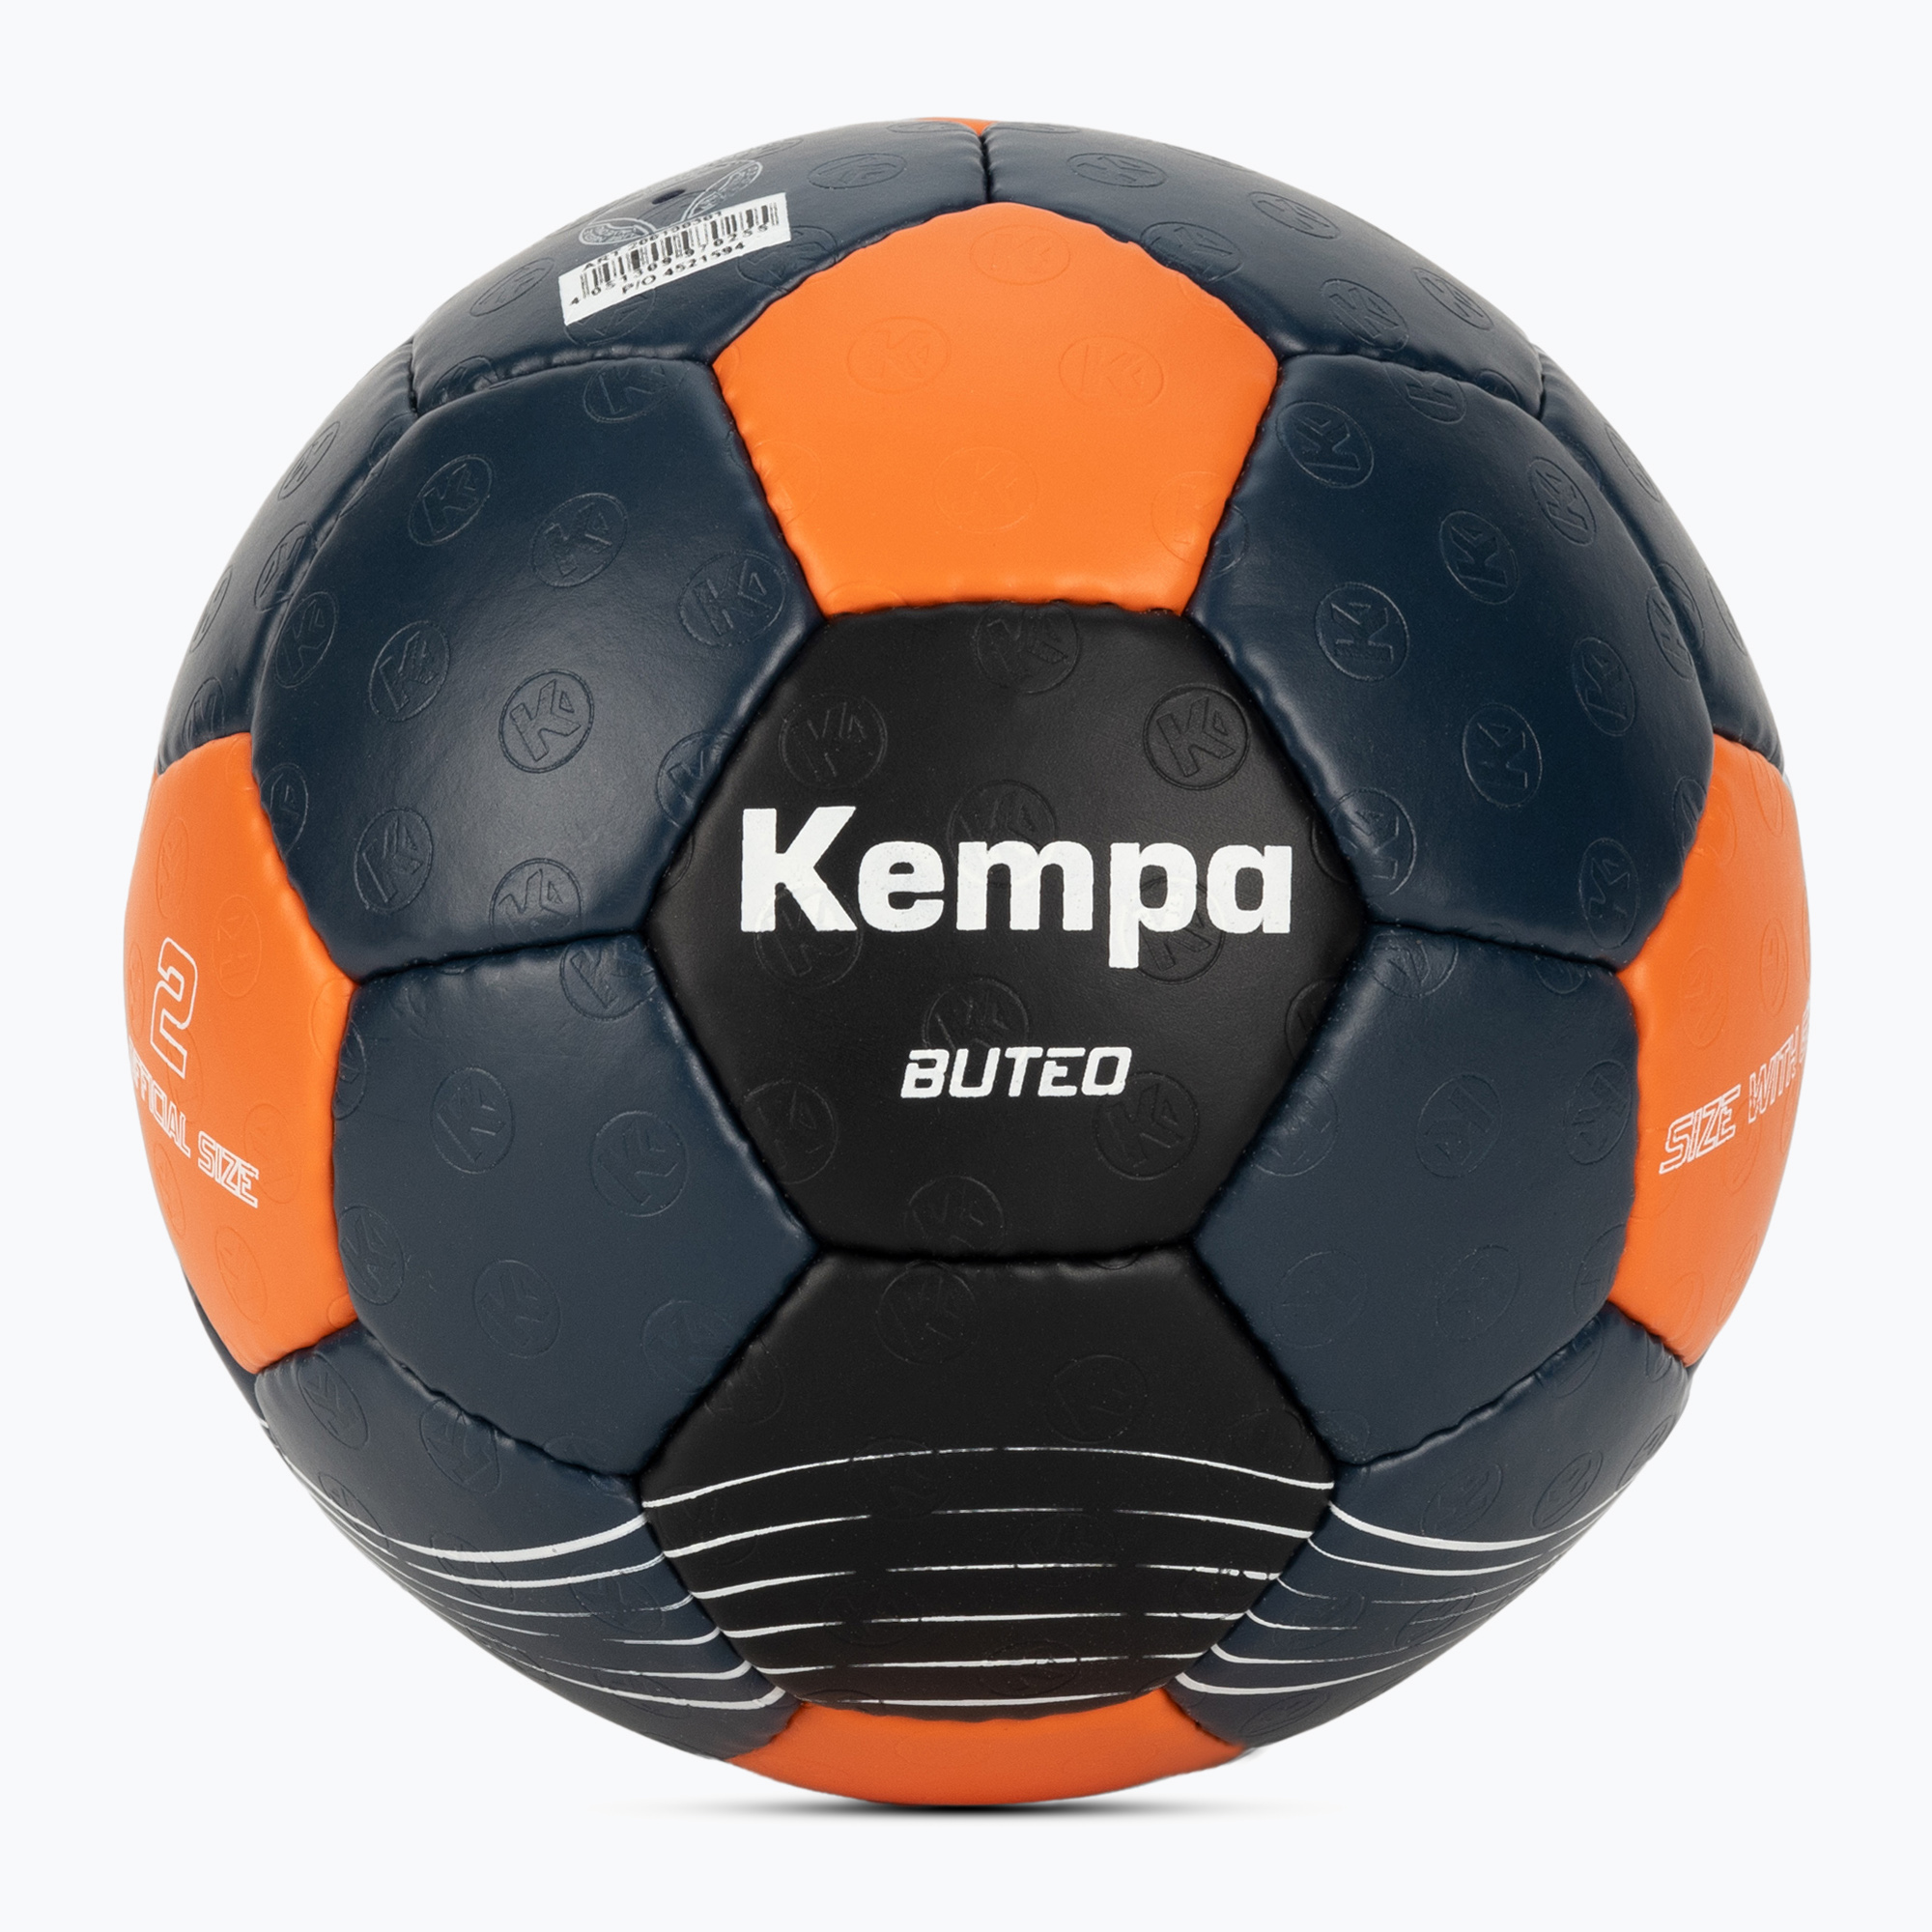 Kempa Buteo хандбална топка 200190301/2 размер 2